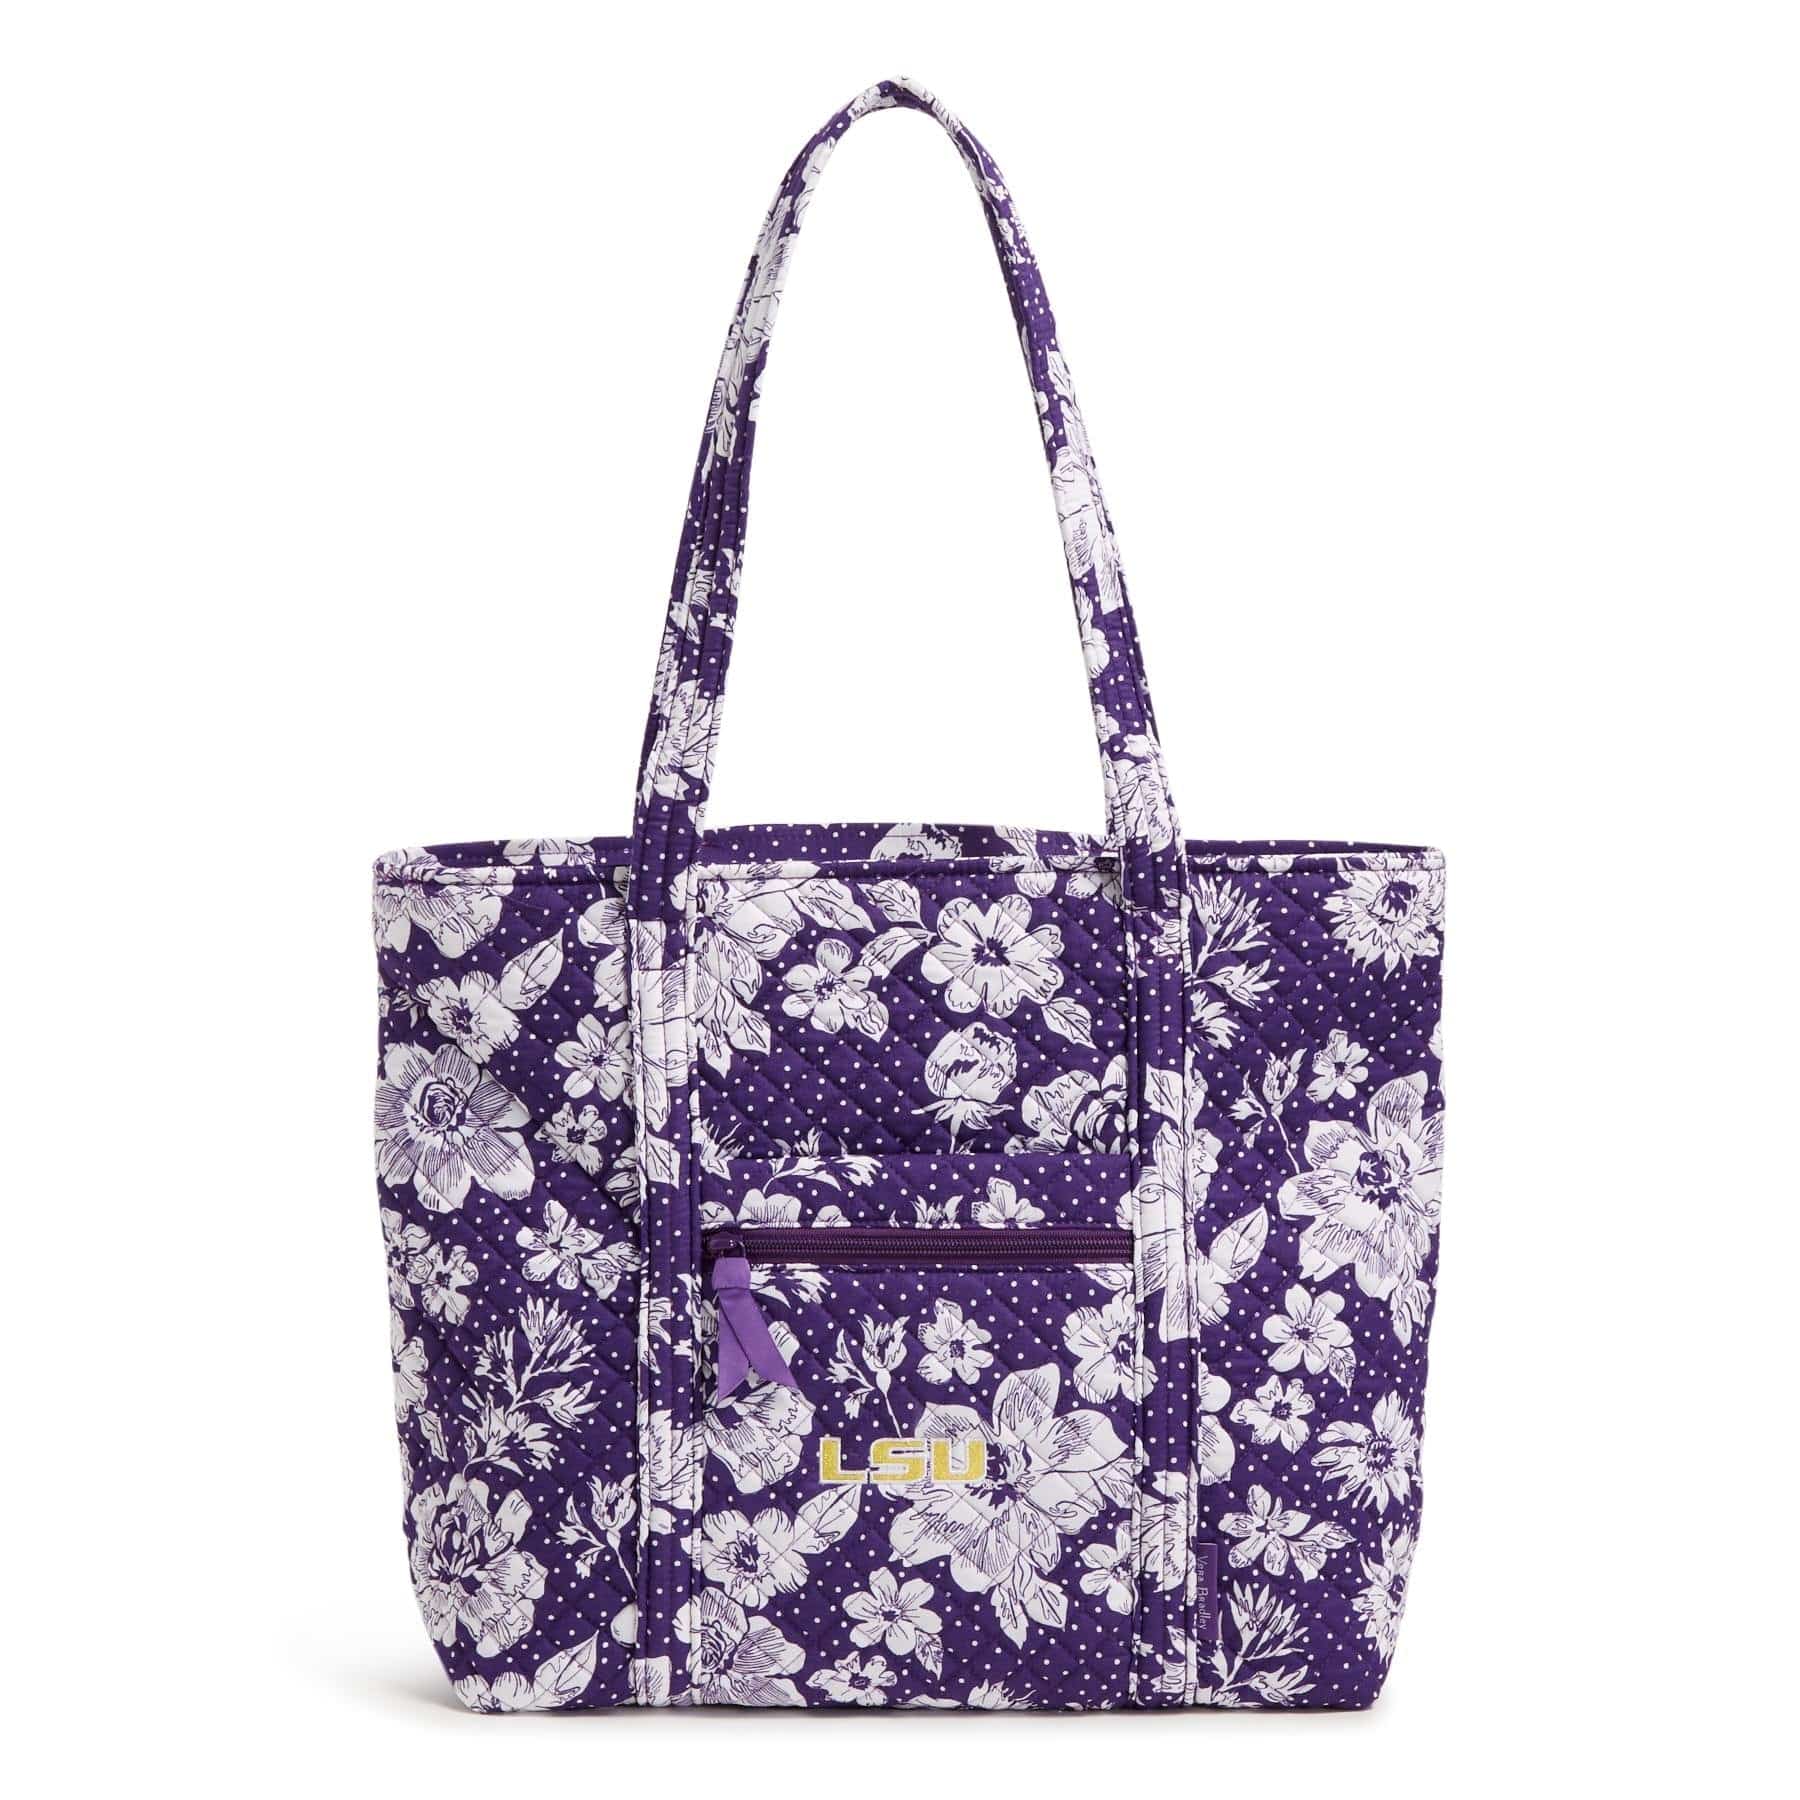 Collegiate Vera Tote Bag-Purple/White Rain Garden with Louisiana State University Logo-Image 1-Vera Bradley